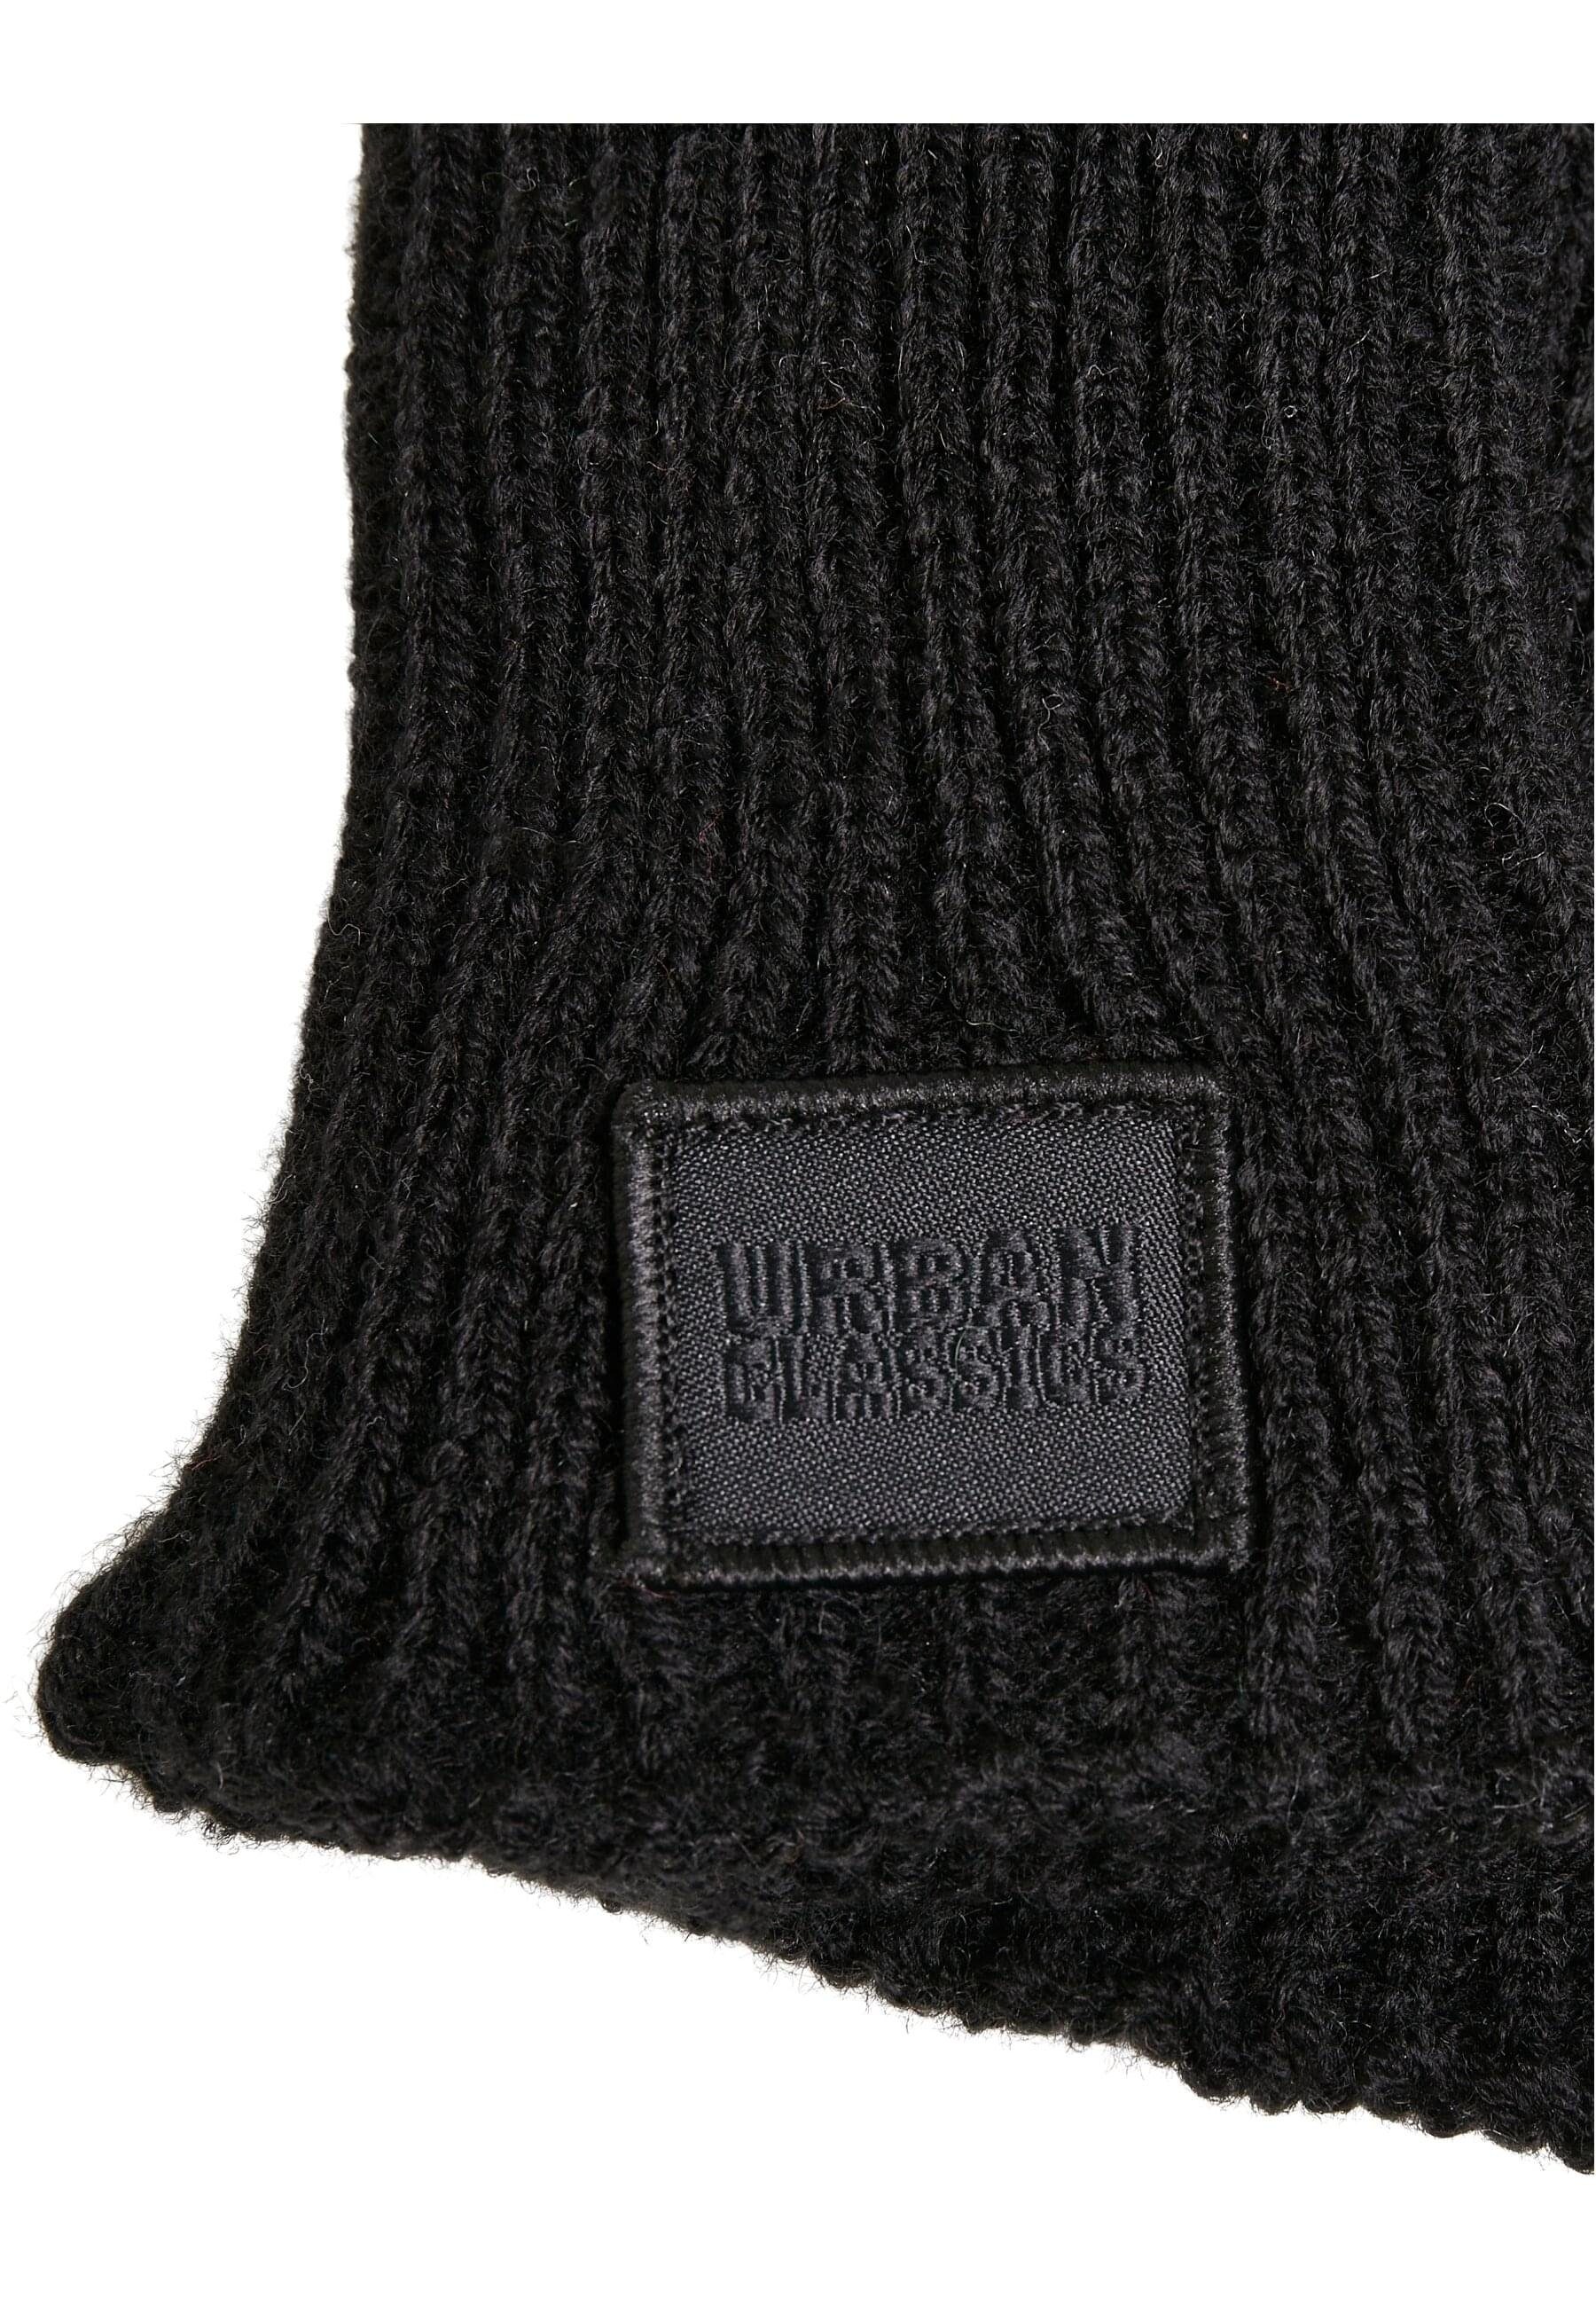 Unisex Smart Knitted Mix black Wool Gloves URBAN Baumwollhandschuhe CLASSICS